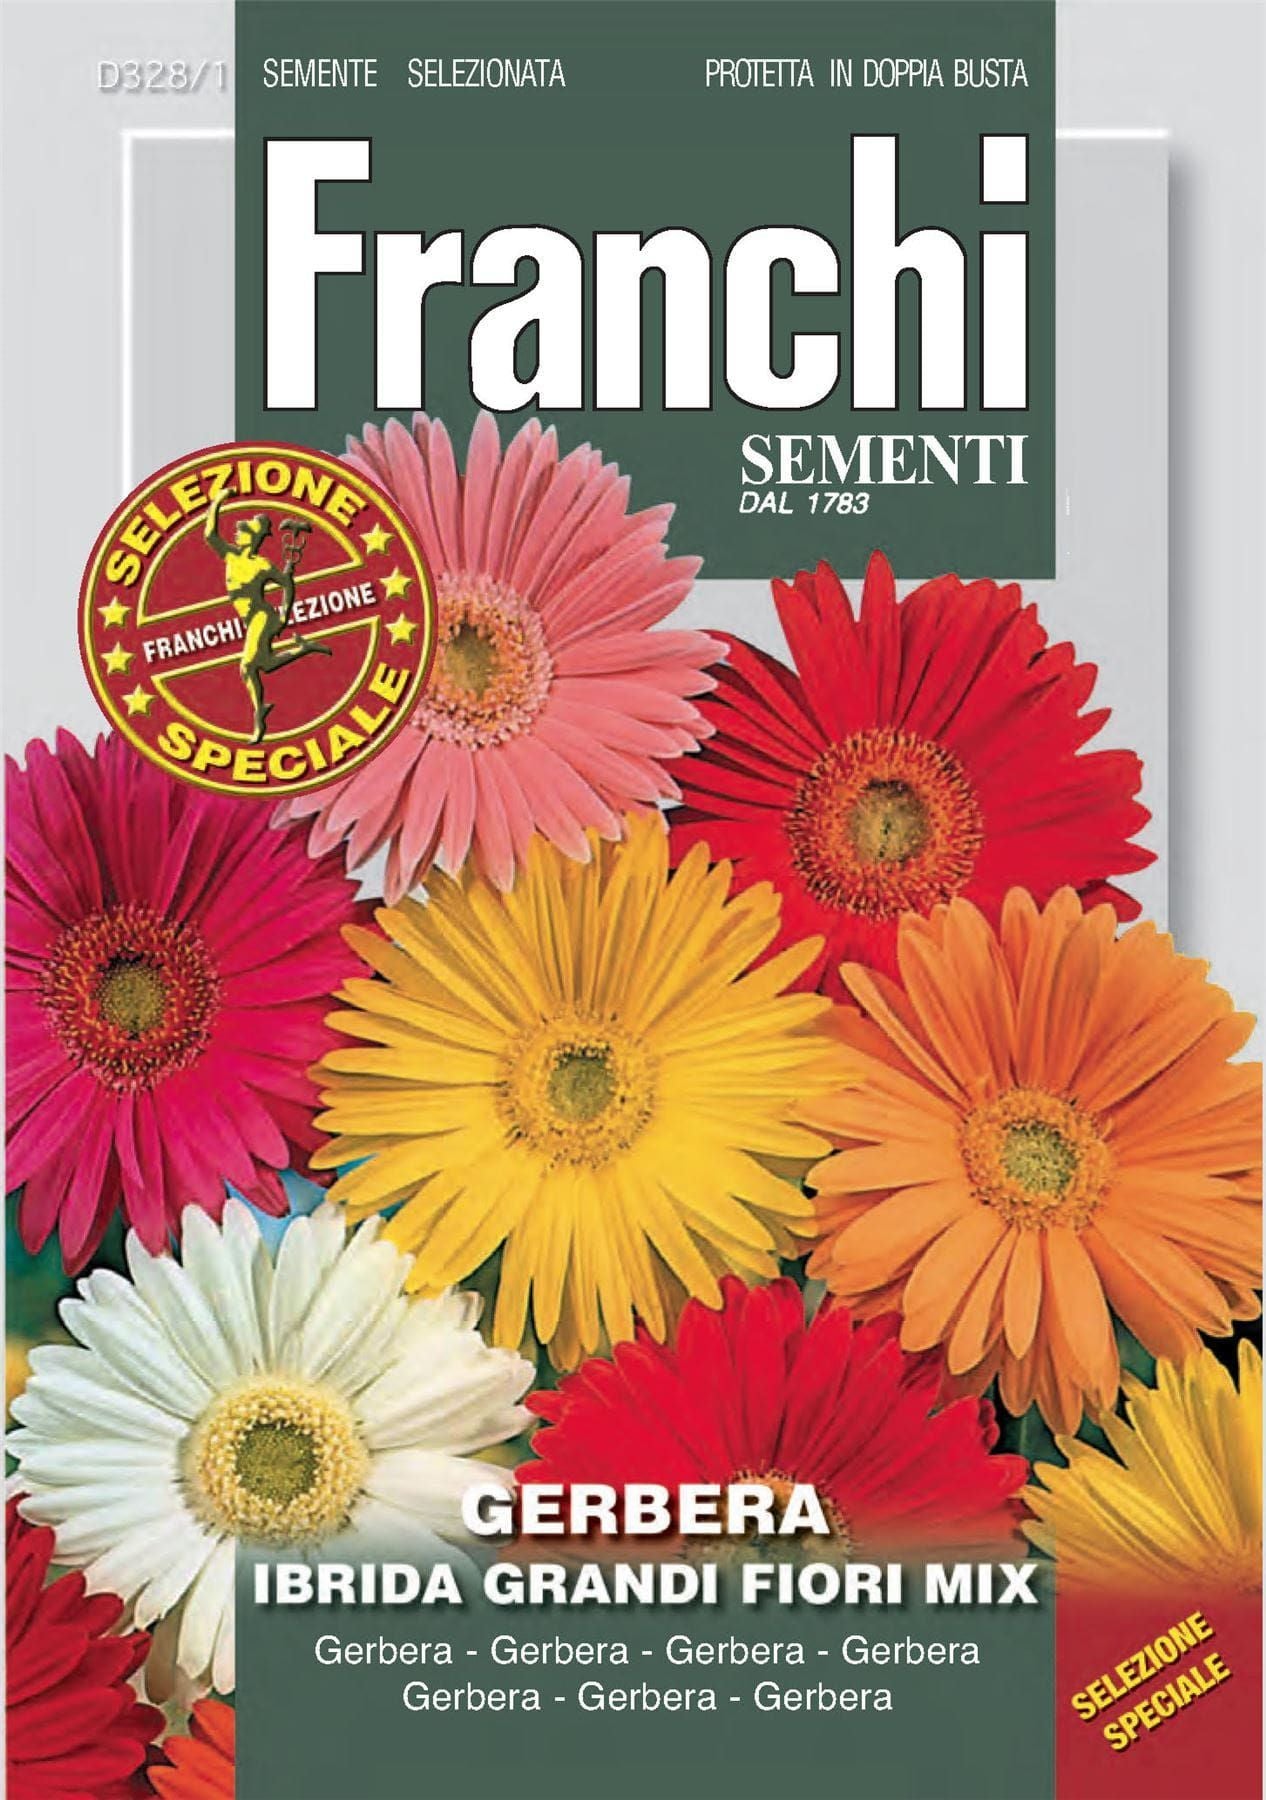 Franchi Seeds of Italy - Flower - FDBF_S 328-1 - Gerbera ibrida - Hybrid Mix - Seeds